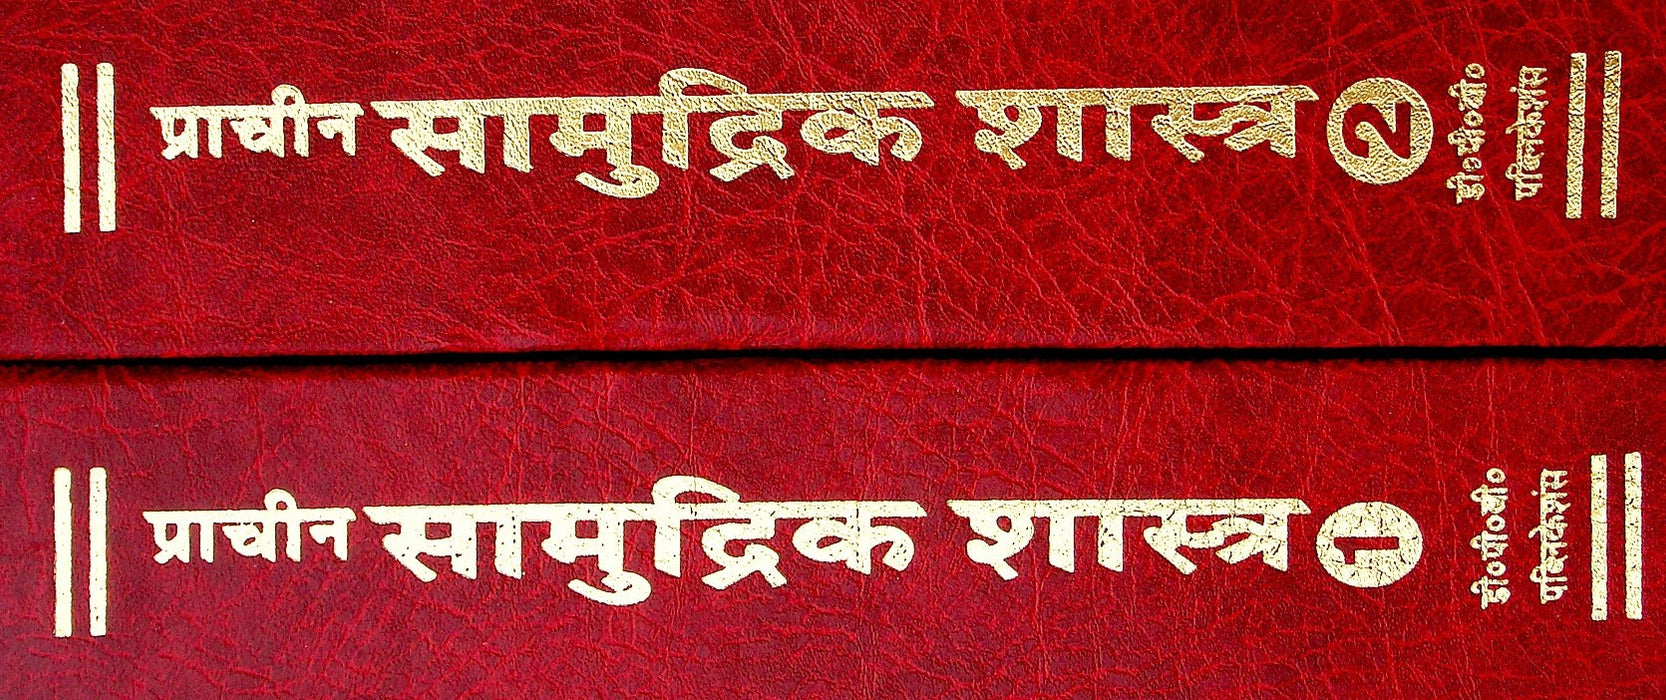 Prachin Samudrik Shastra in hindi - 2 volumes - Devshoppe